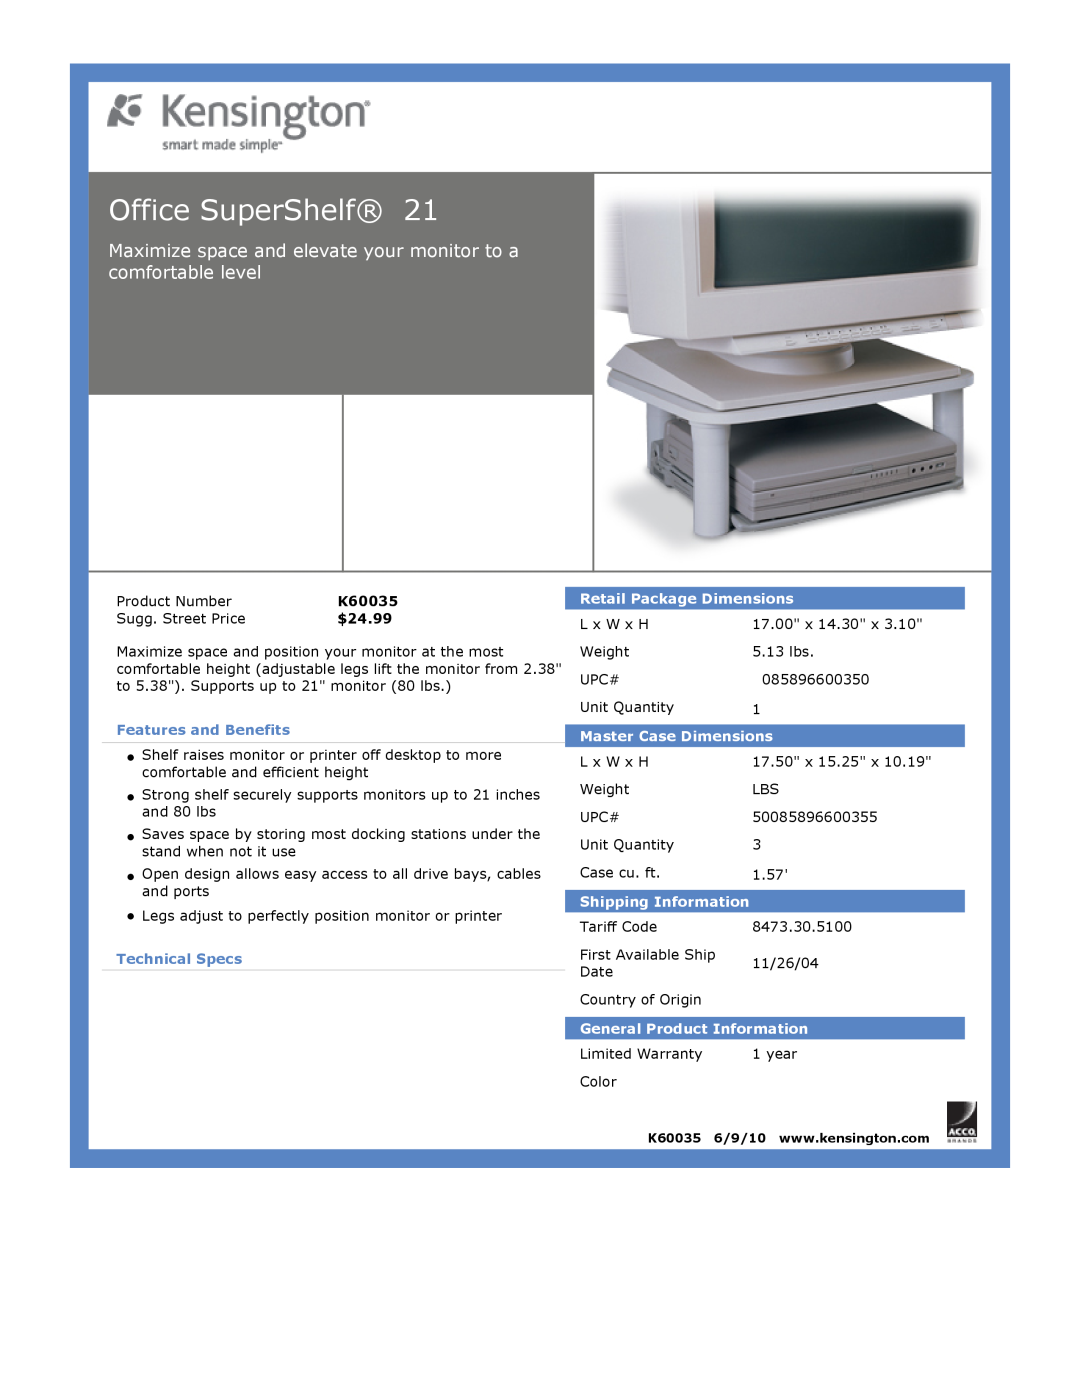 Kensington EU64325 dimensions Office SuperShelf, $24.99, Features and Benefits, Technical Specs, Retail Package Dimensions 